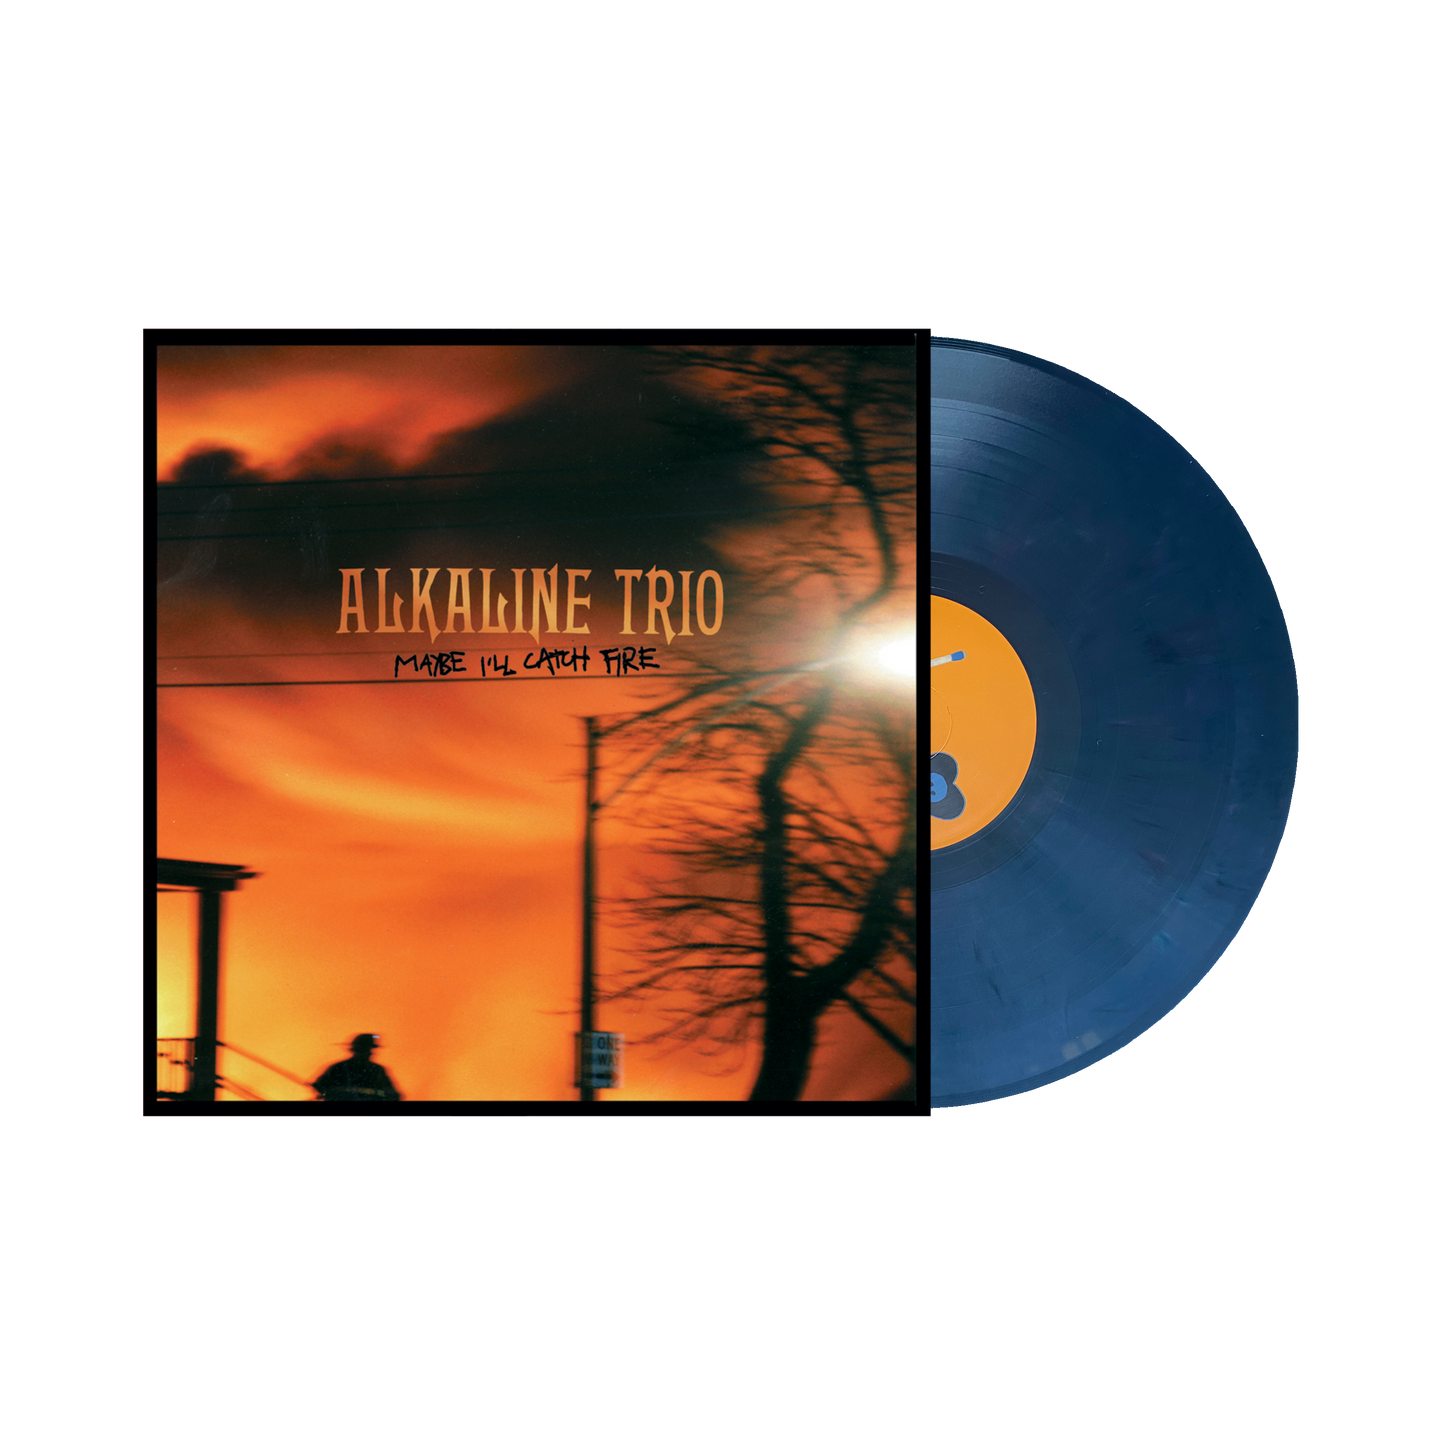 Alkaline Trio "Maybe I'll Catch Fire" LP